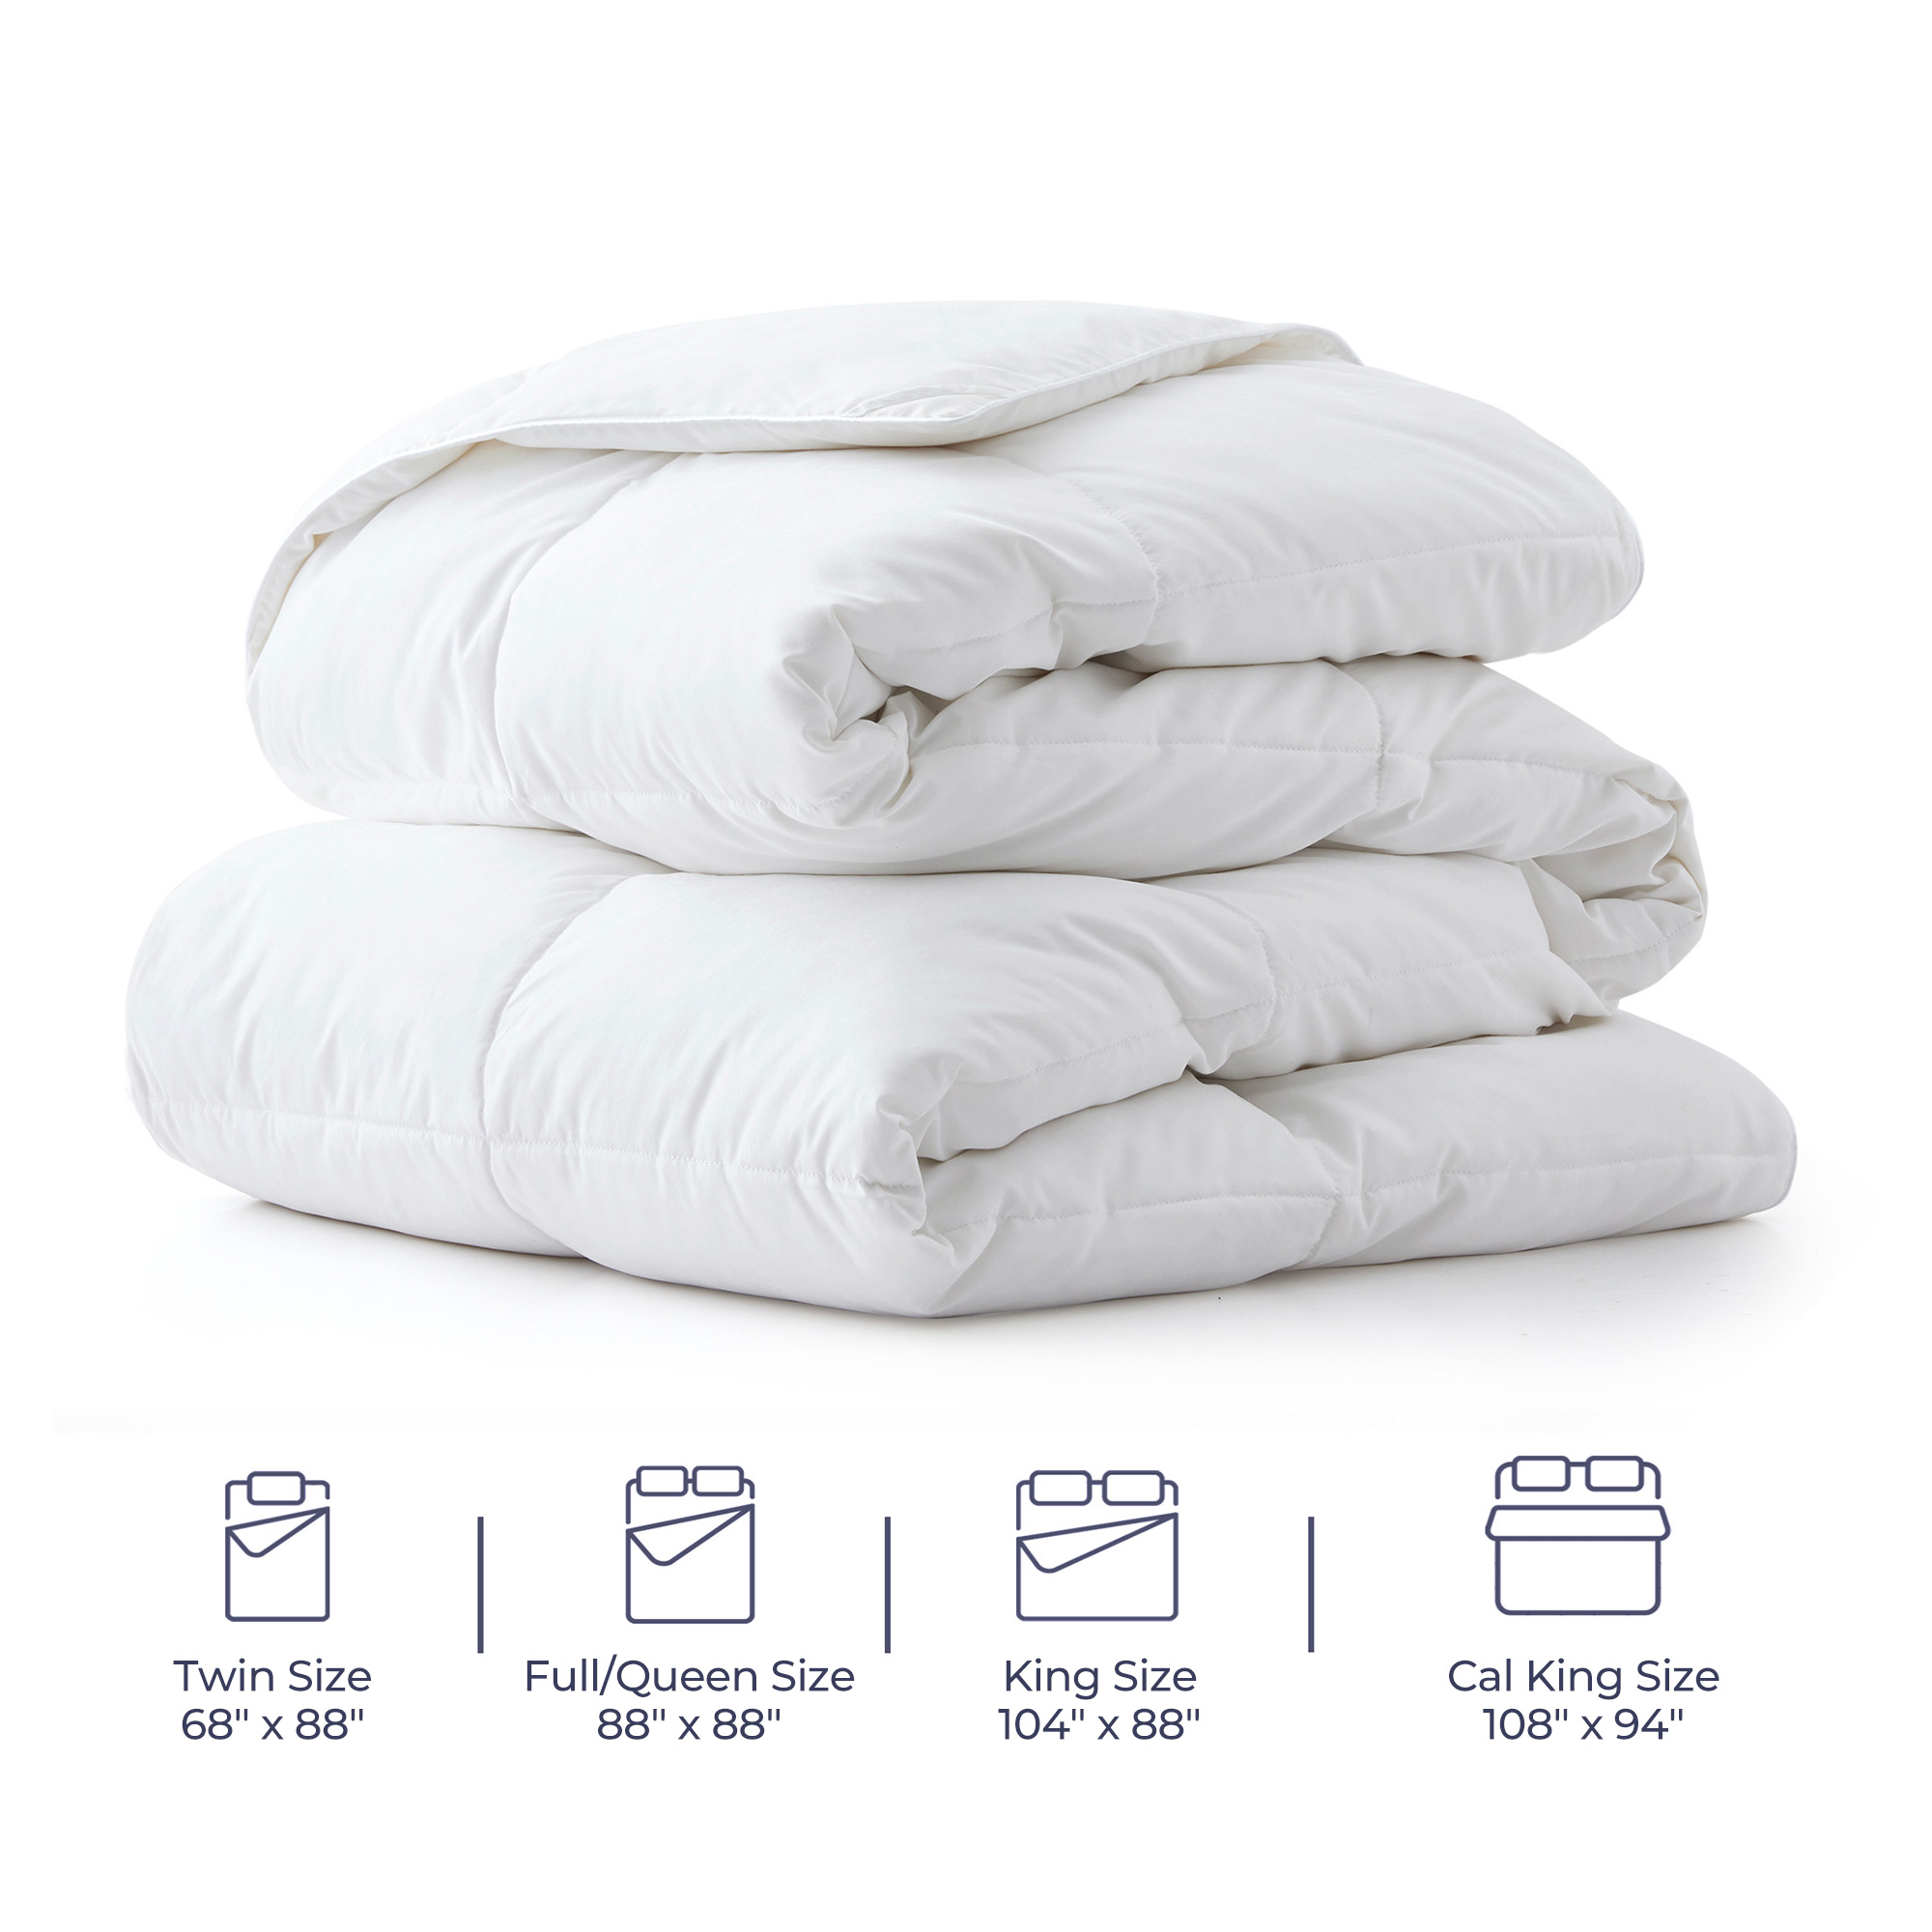 All Seasons White Goose Feather Comforter - Luxurious And Versatile Duvet Insert - King